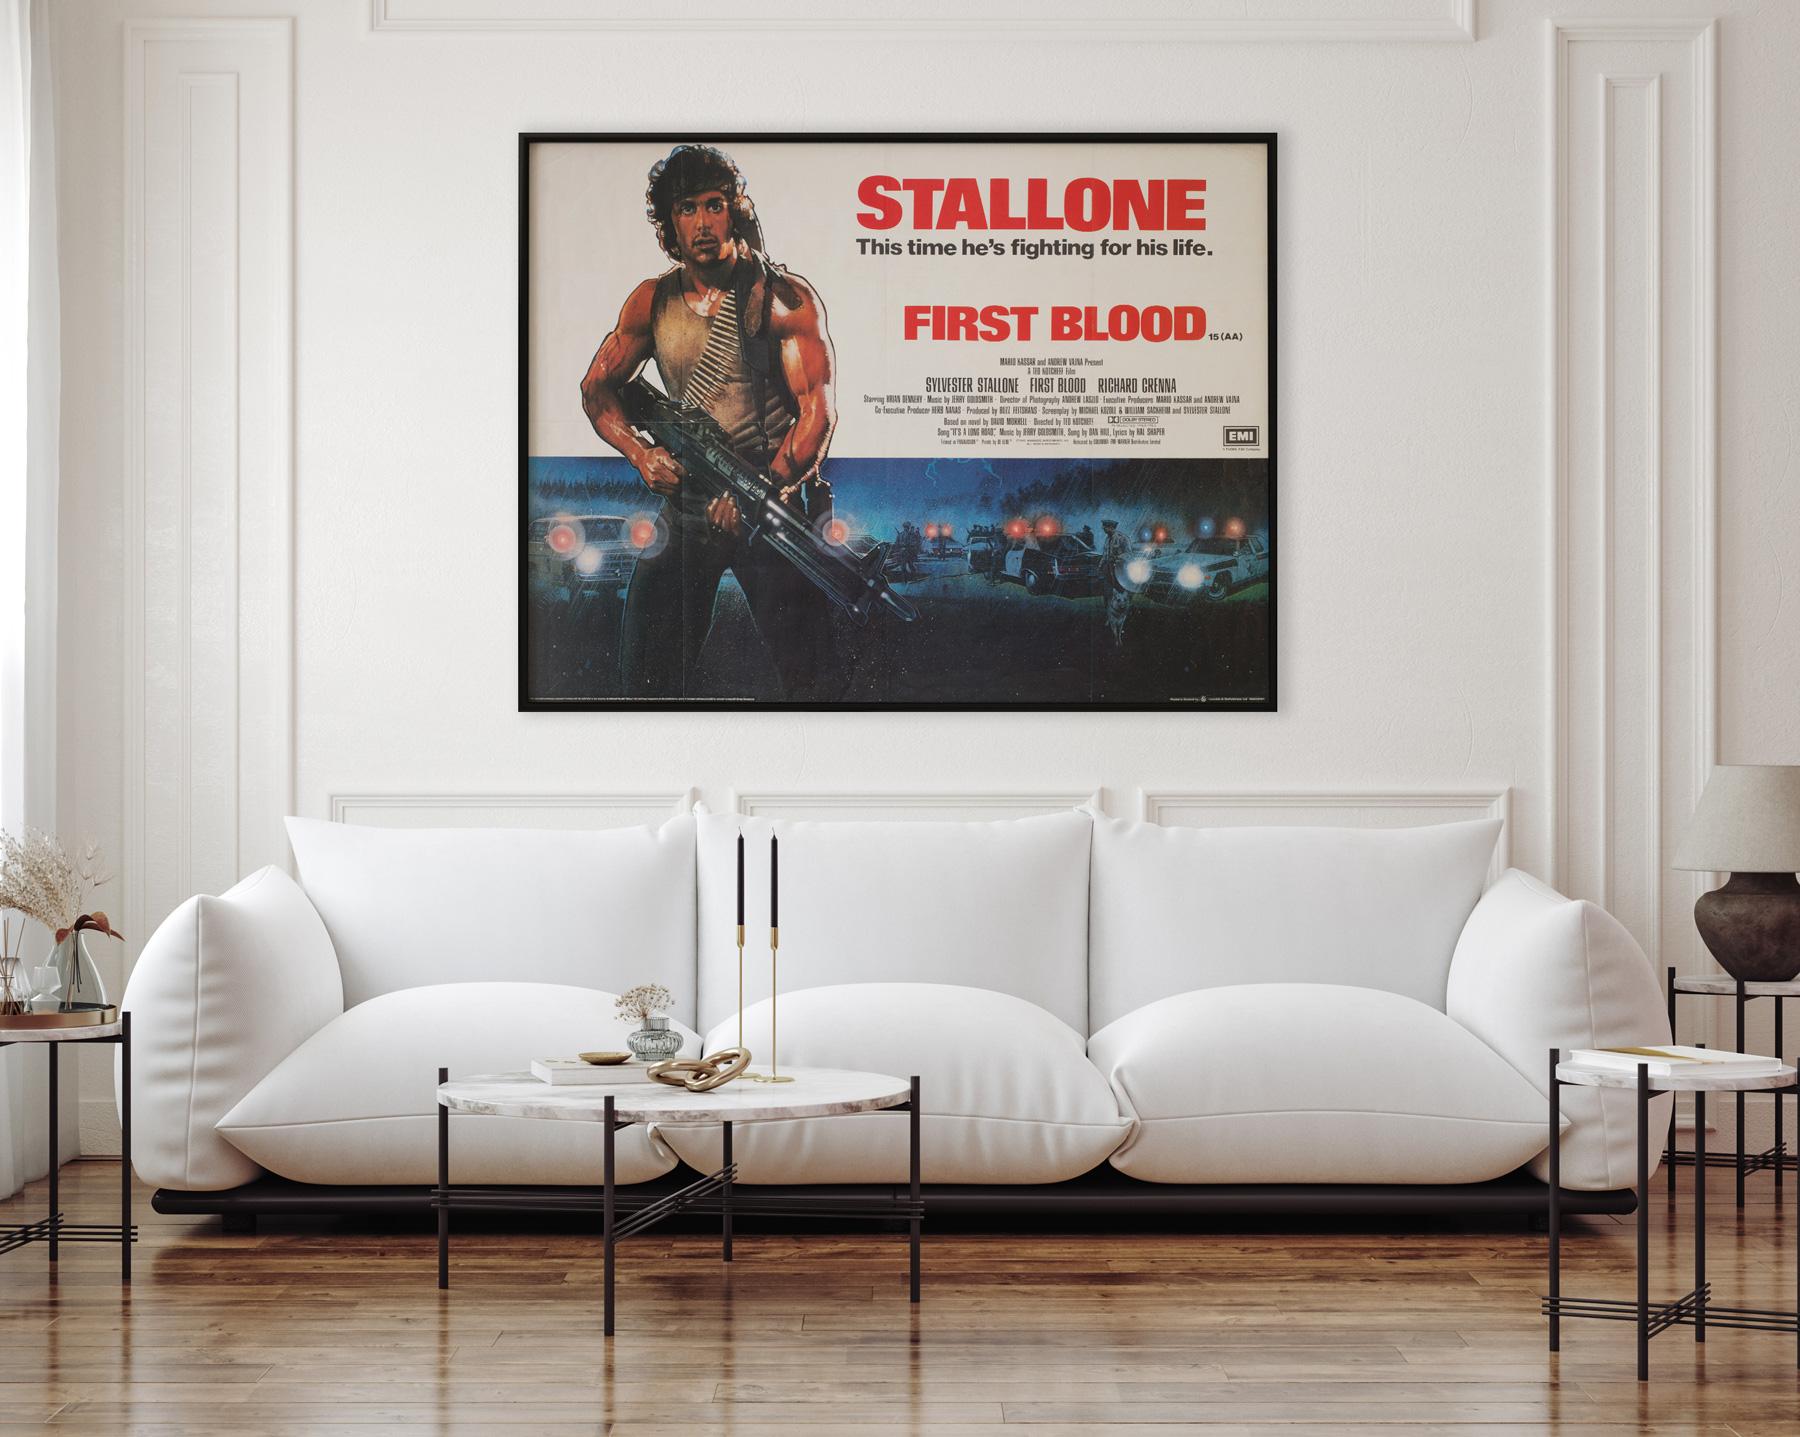 Original UK Quad sheet film poster for Sylvester Stallone's First Blood, featuring unmistakable Drew Struzan artwork. Rambo, First Blood starred, alongside Stallone, Richard Crenna, Brian Dennehy, Bill McKinney, Jack Starrett, and David Caruso.